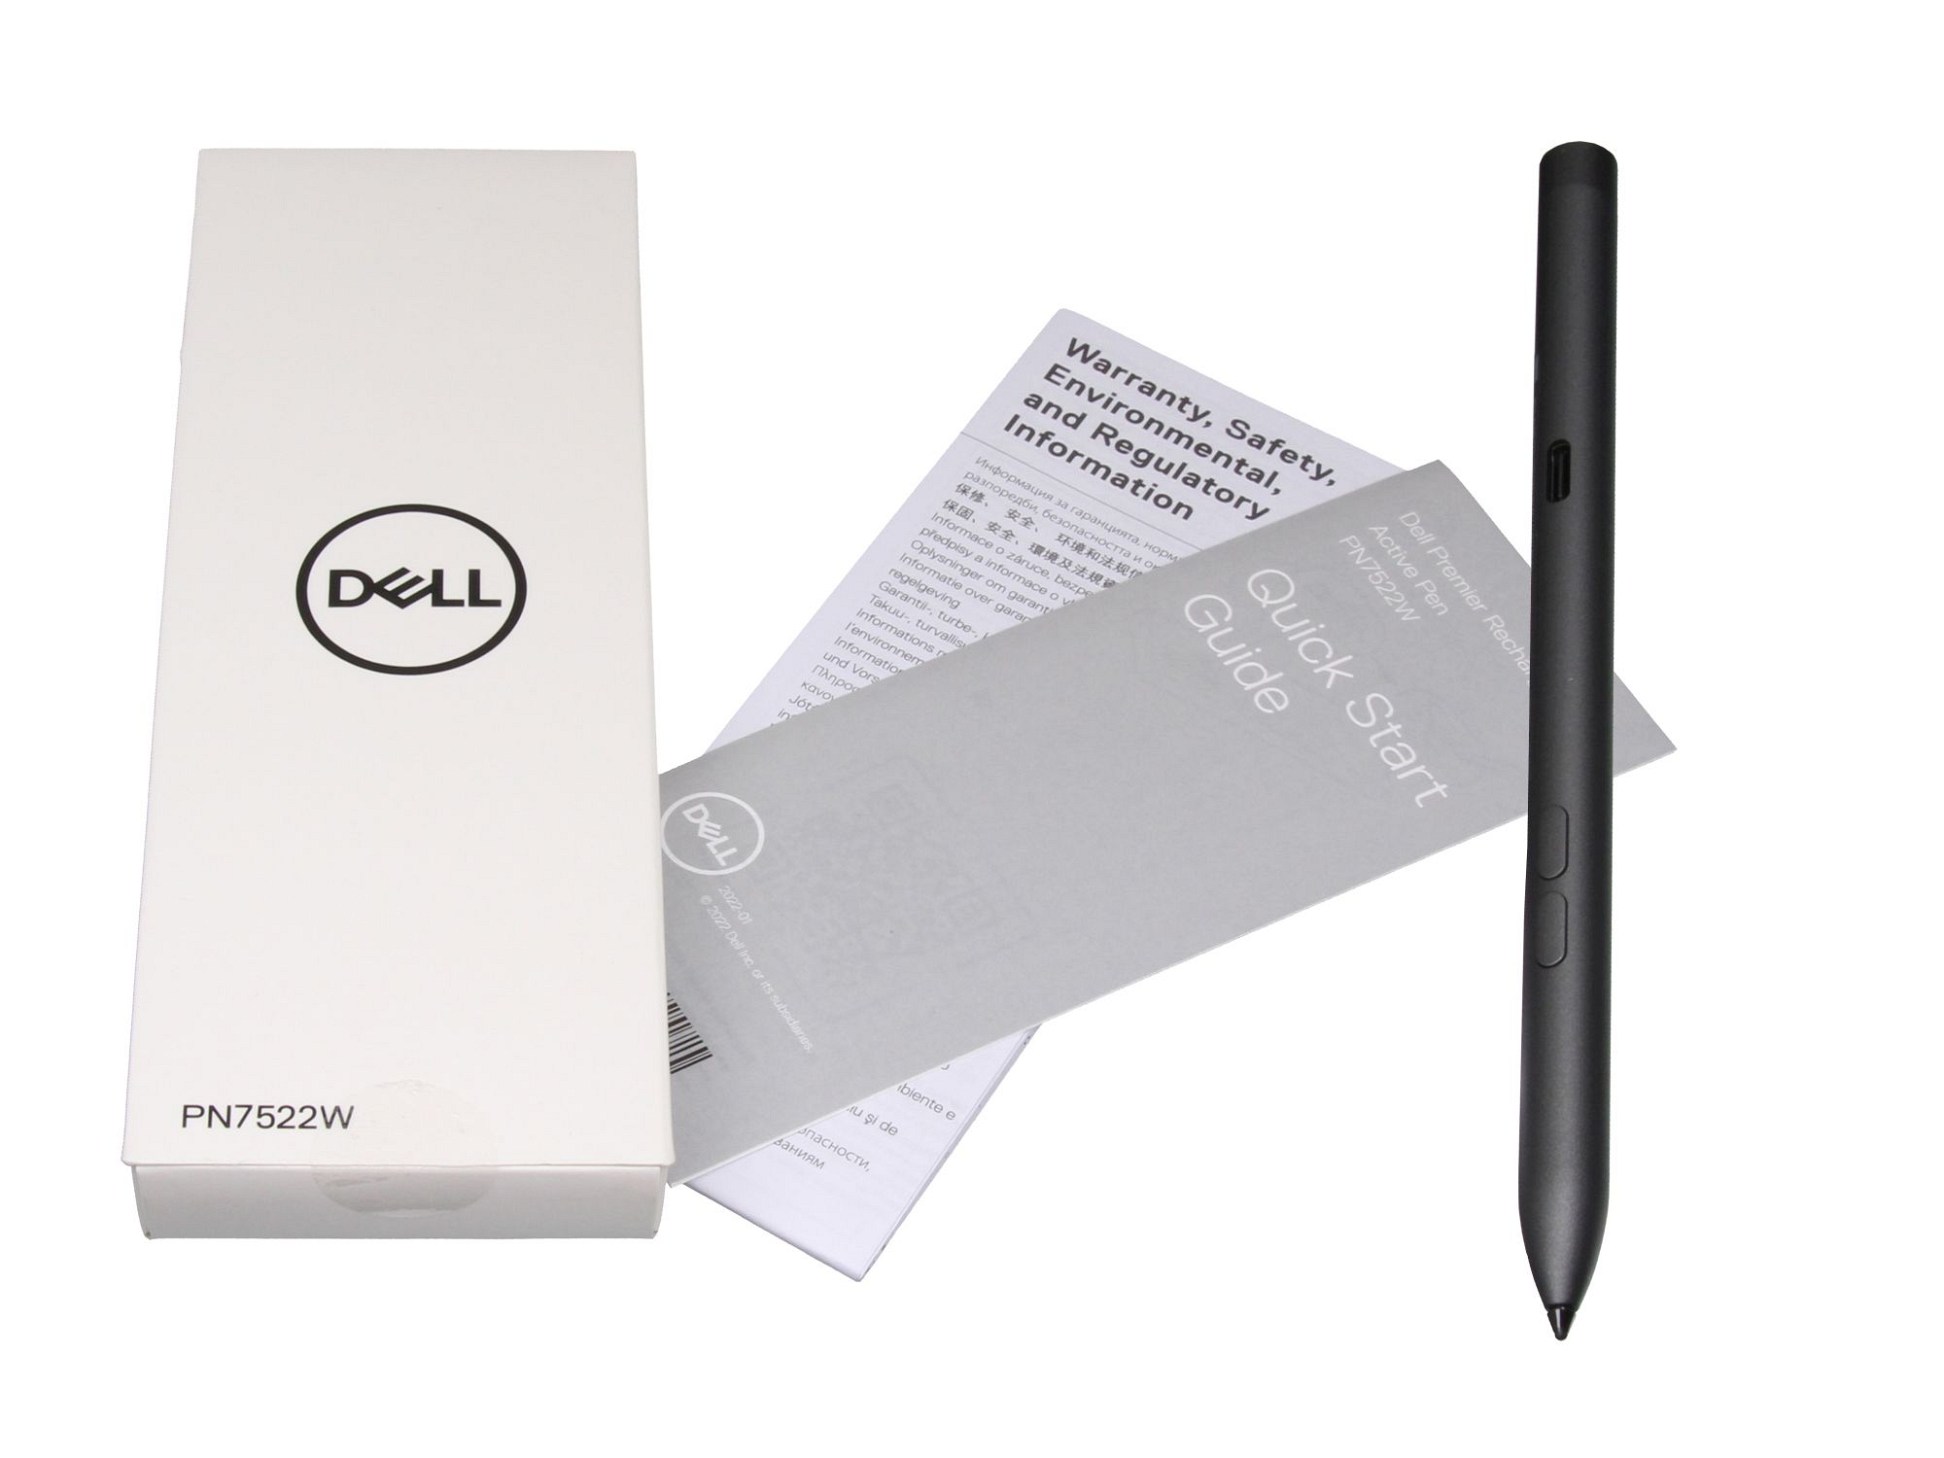 Dell PN7522W Original Active Premier Pen